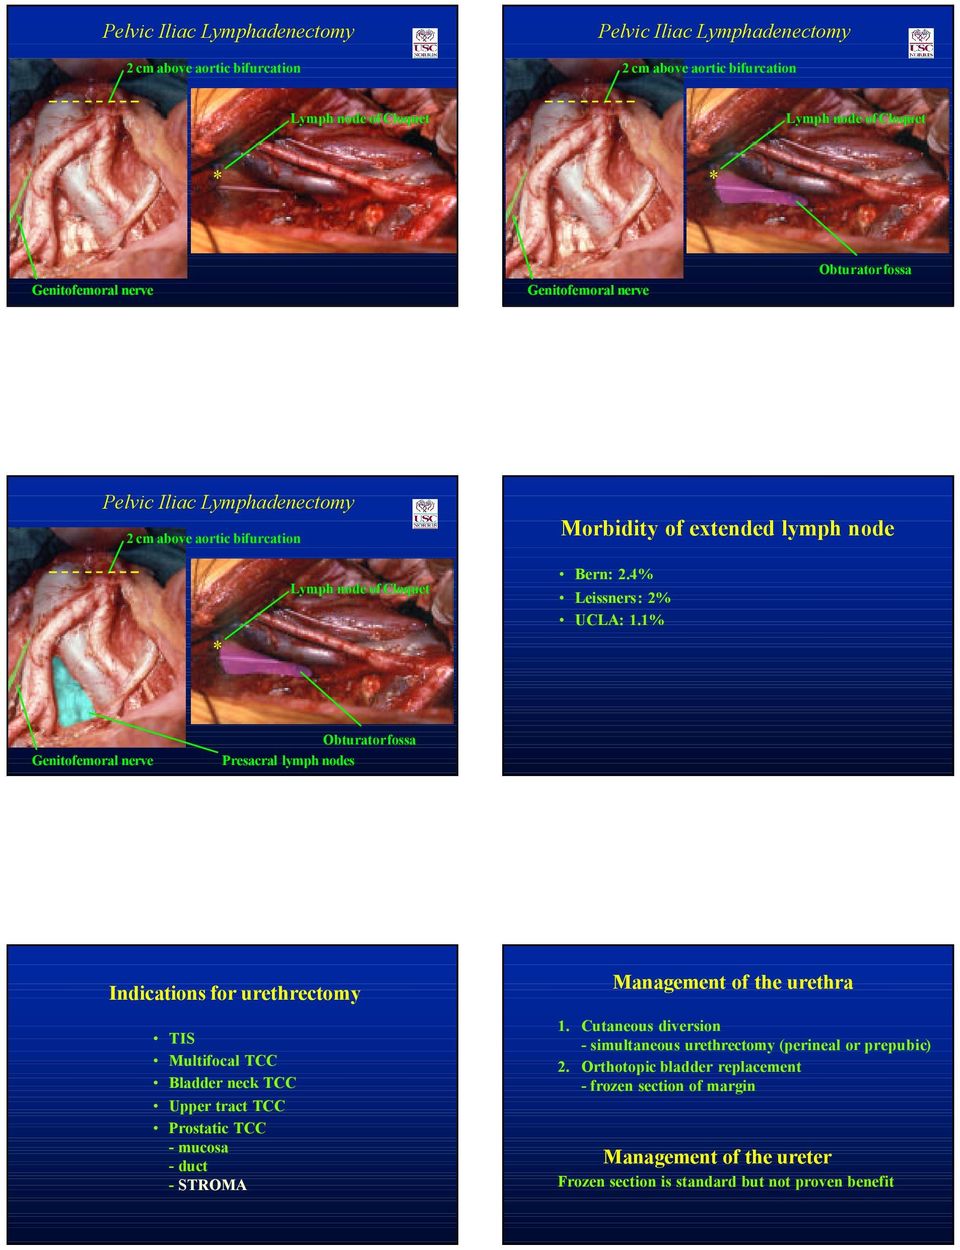 1% Genitofemoral nerve Obturatorfossa Presacral lymph nodes Indications for urethrectomy TIS Multifocal TCC Bladder neck TCC Upper tract TCC Prostatic TCC - mucosa - duct - STROMA Management of